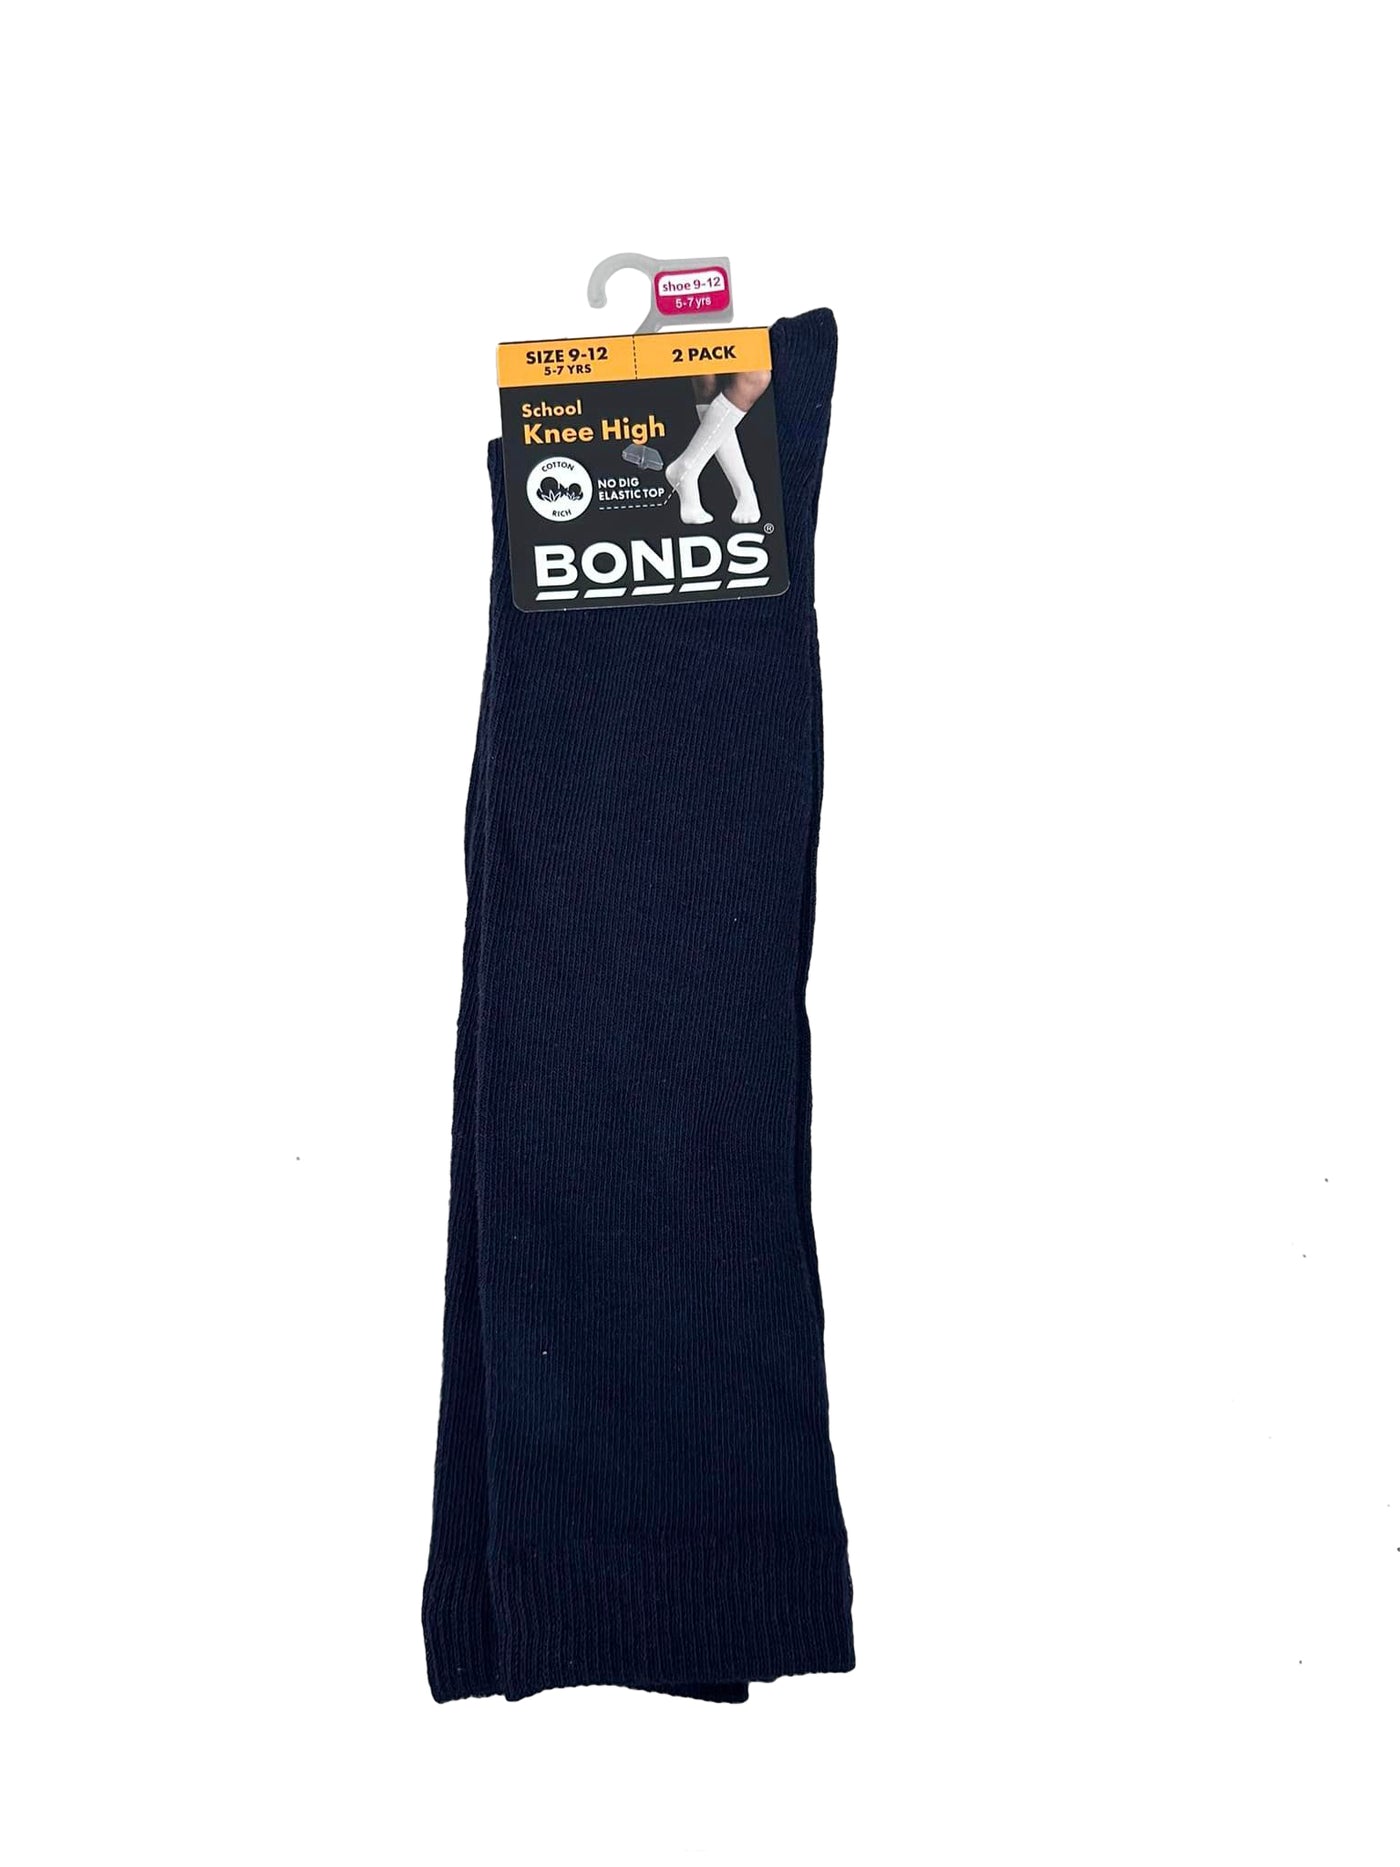 Bonds Kids School Knee High Socks 2 Pack - Navy